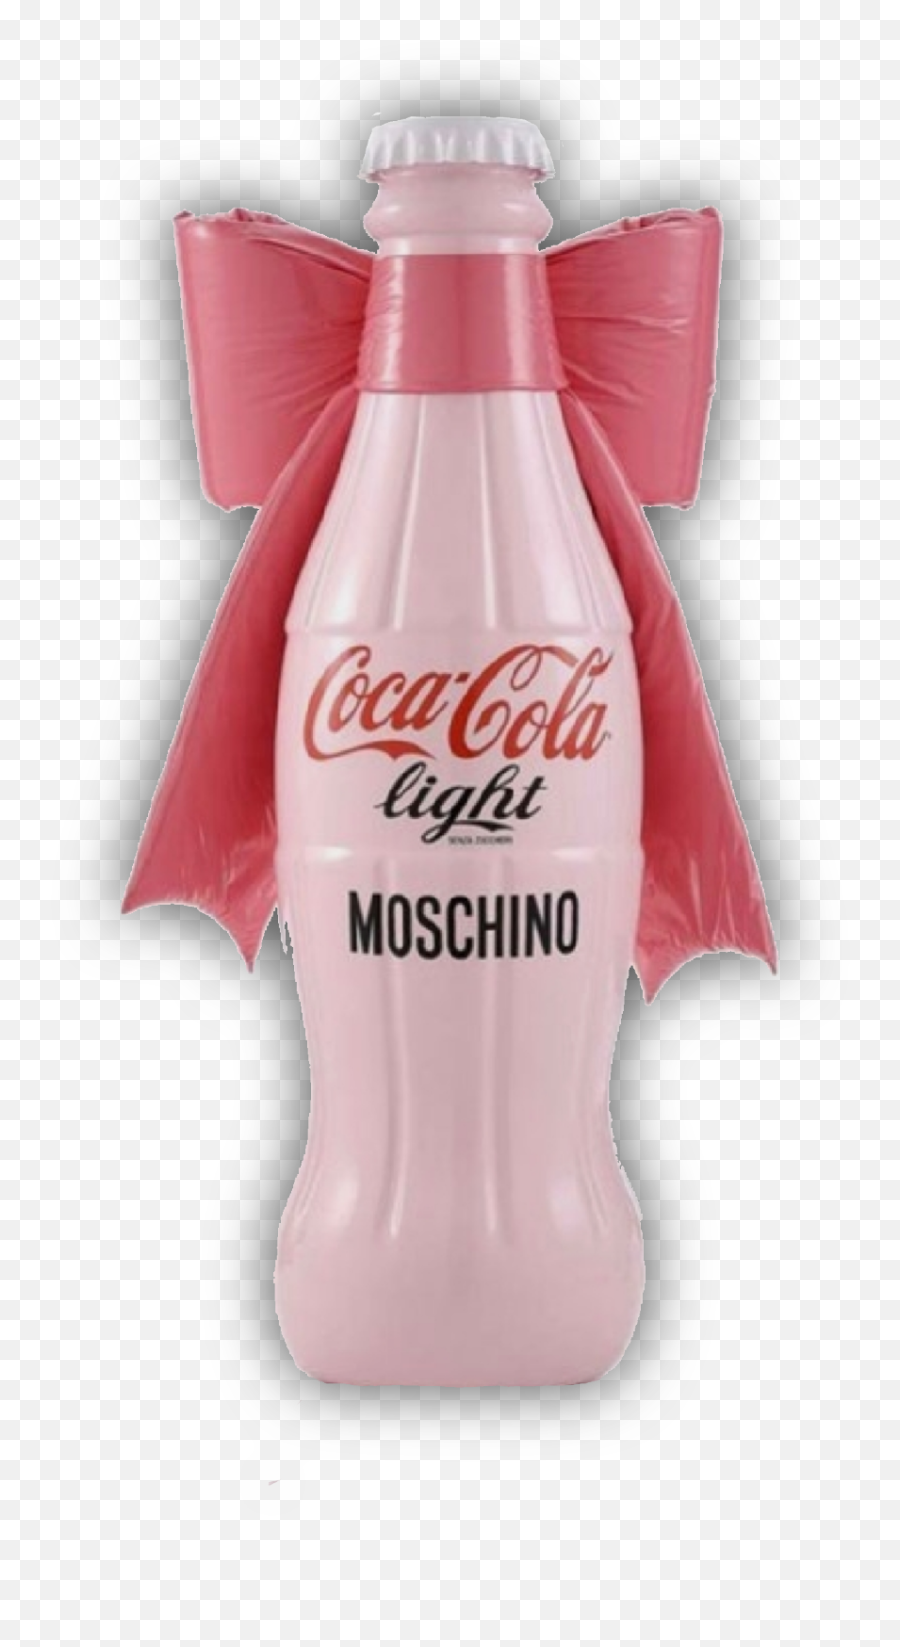 Cocacola Moschino Png Overlay Pink Complexedit Complex - Coca Cola Designer Bottles,Cocacola Png